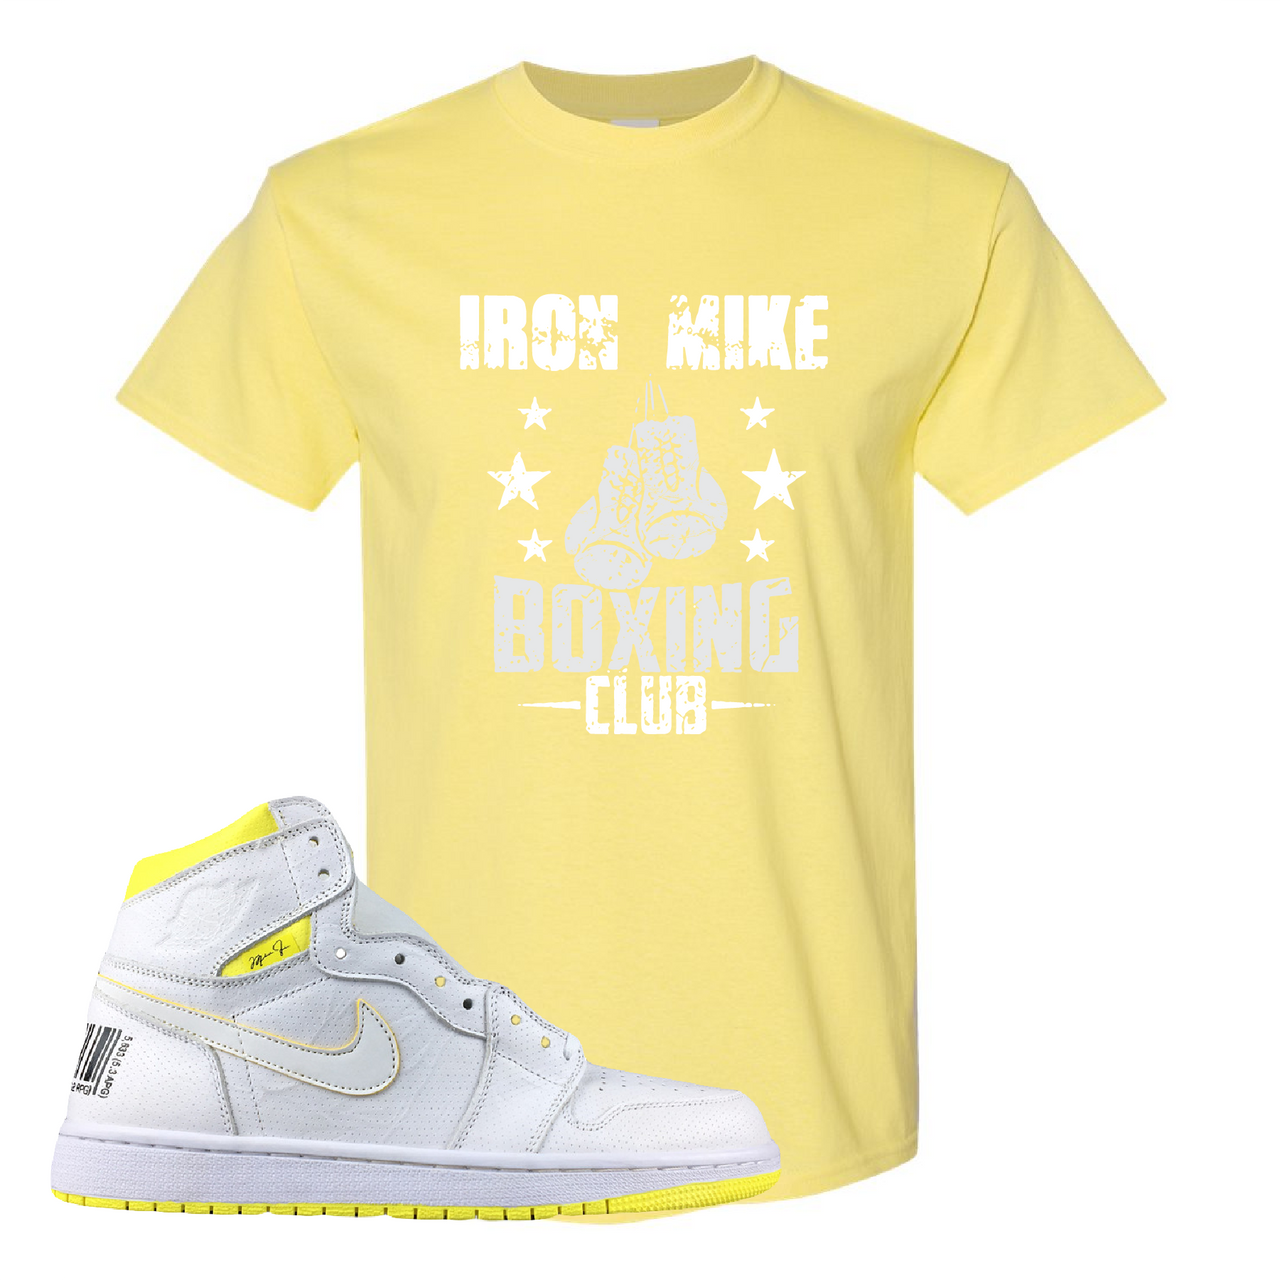 Jordan 1 First Class Flight Iron Mike Boxing Club Sneaker Matching Yellow T-Shirt